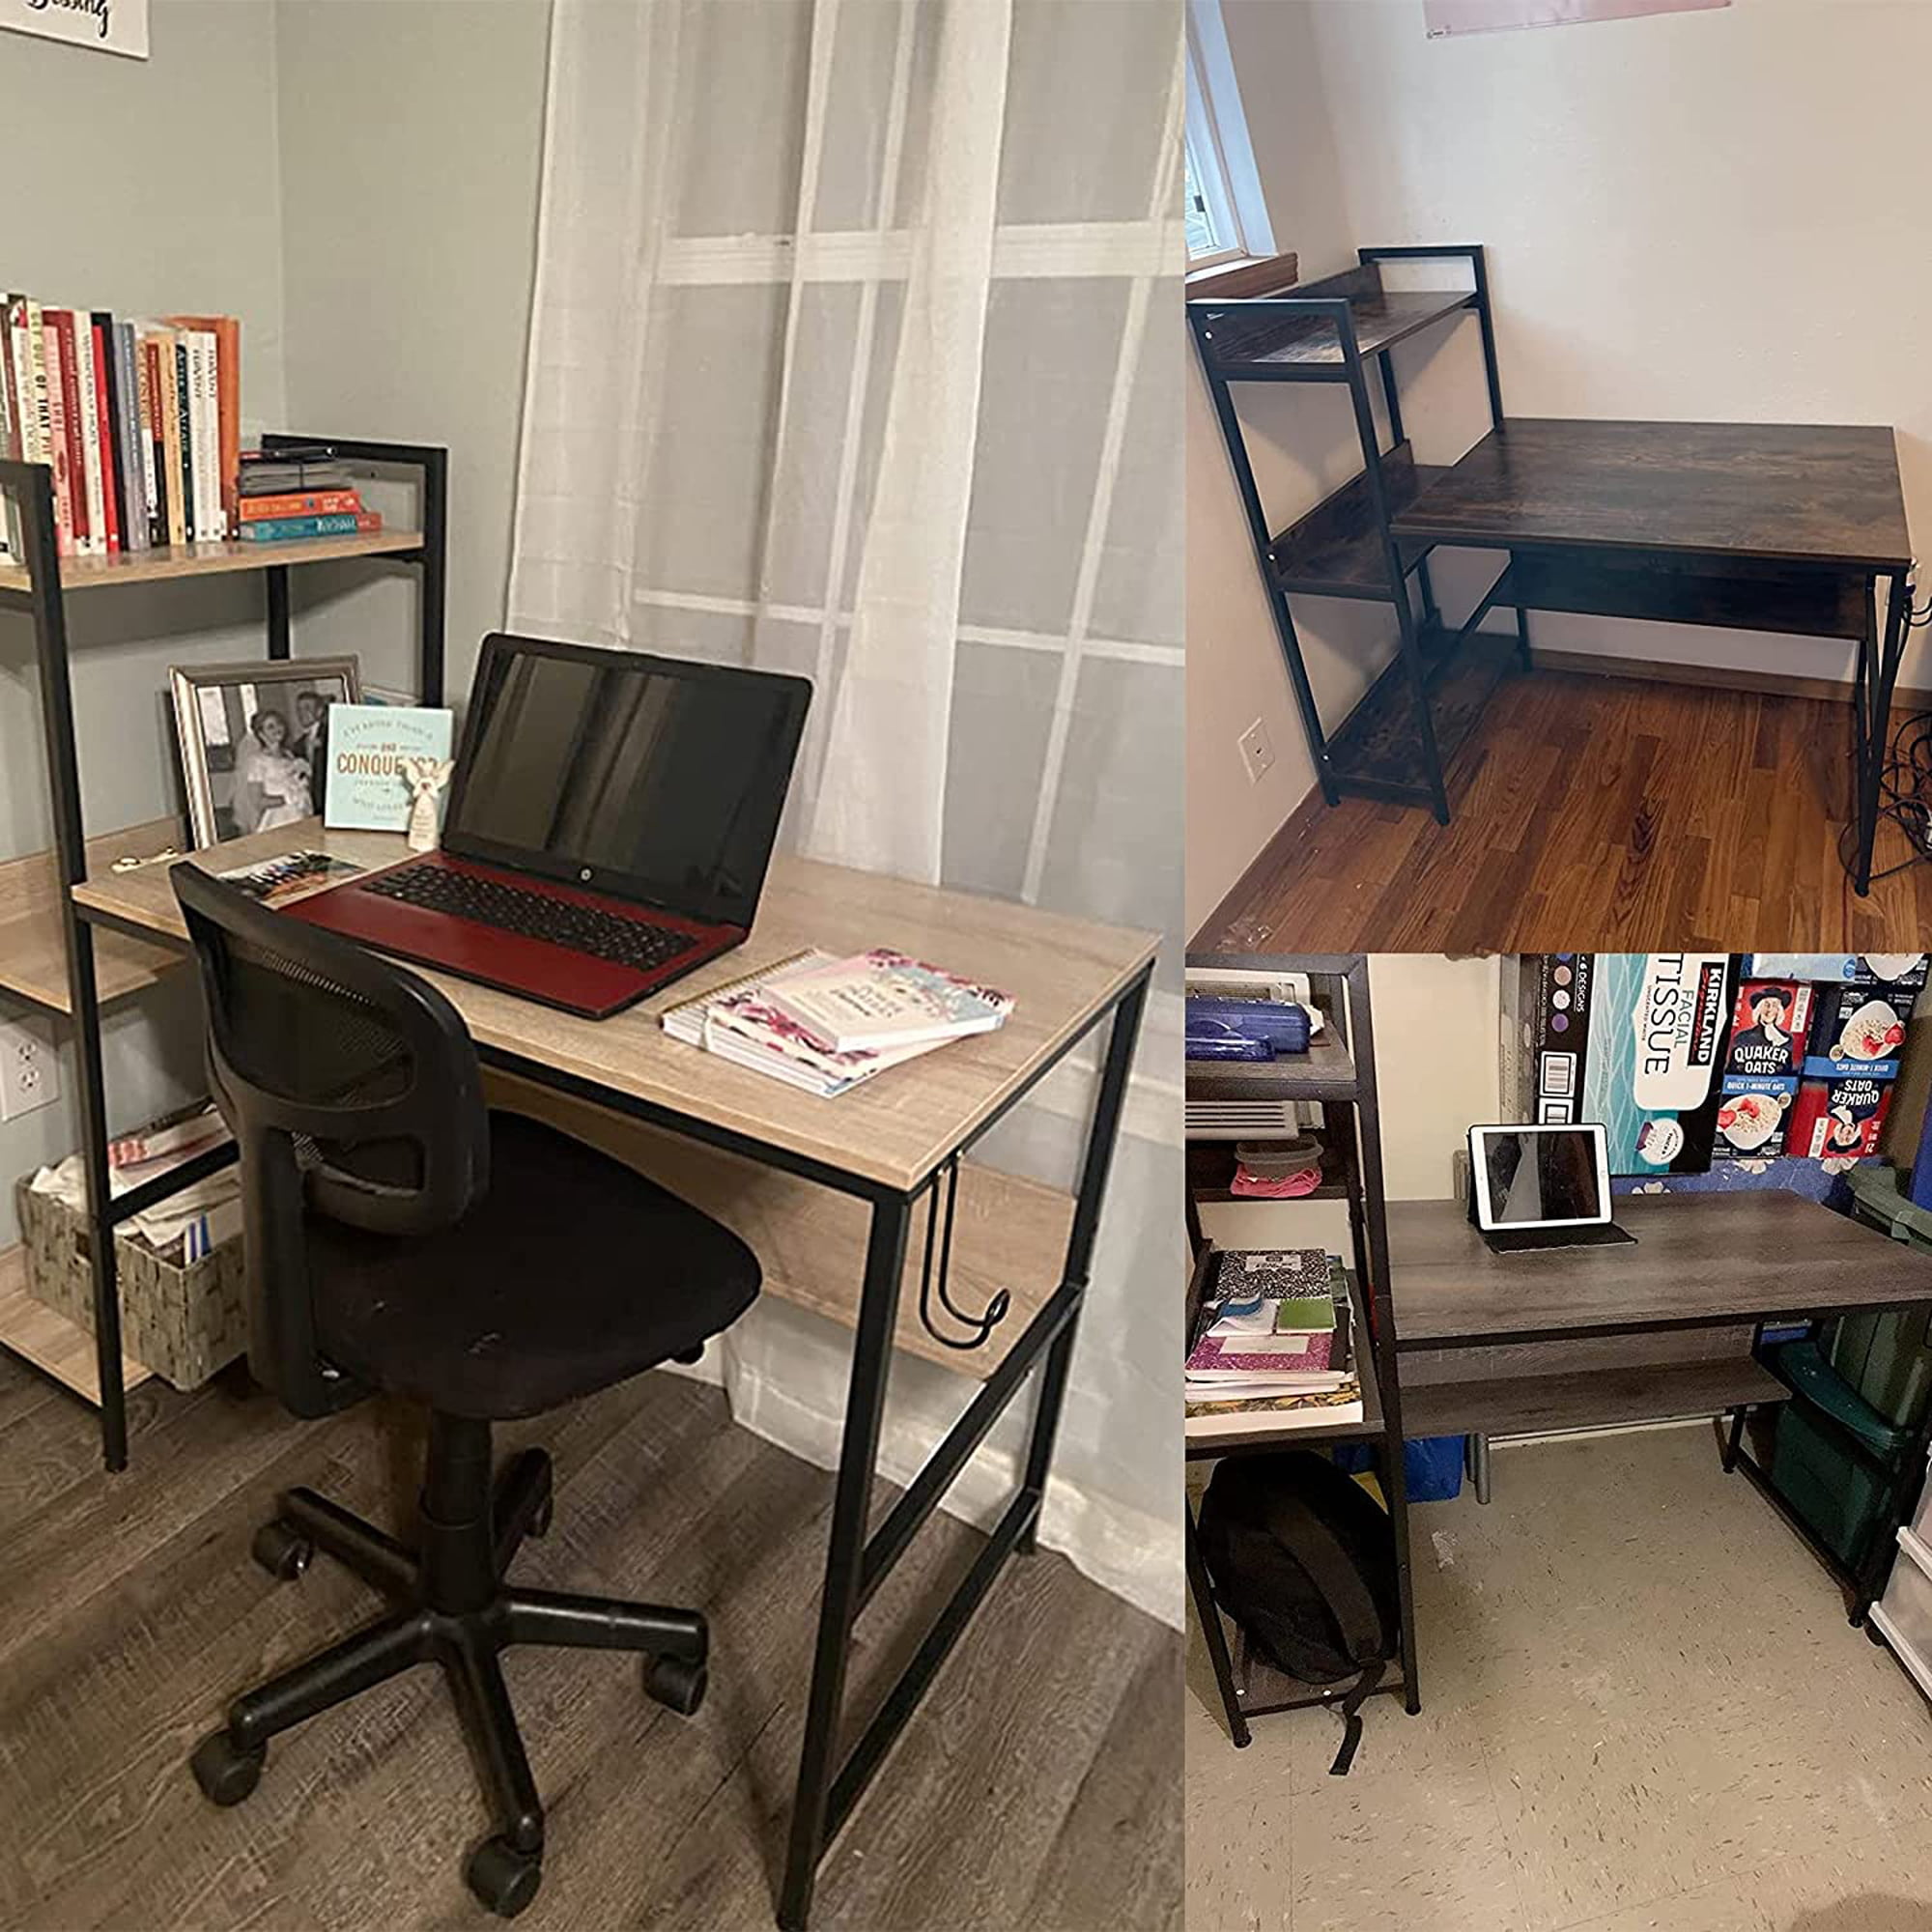 Bestier Computer Office Desk with Steel Frame, Reversible Book Shelves,  Headphone Hook, Adjustable Feet, & Under Desk Storage, Grey